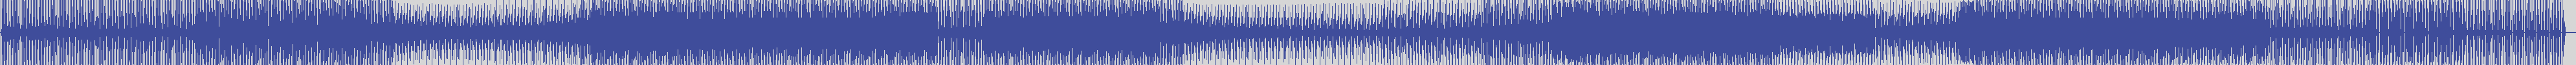 atomic_recordings [AR010] Kenny Bizzarro - Floor 54 [Extended Mix] audio wave form